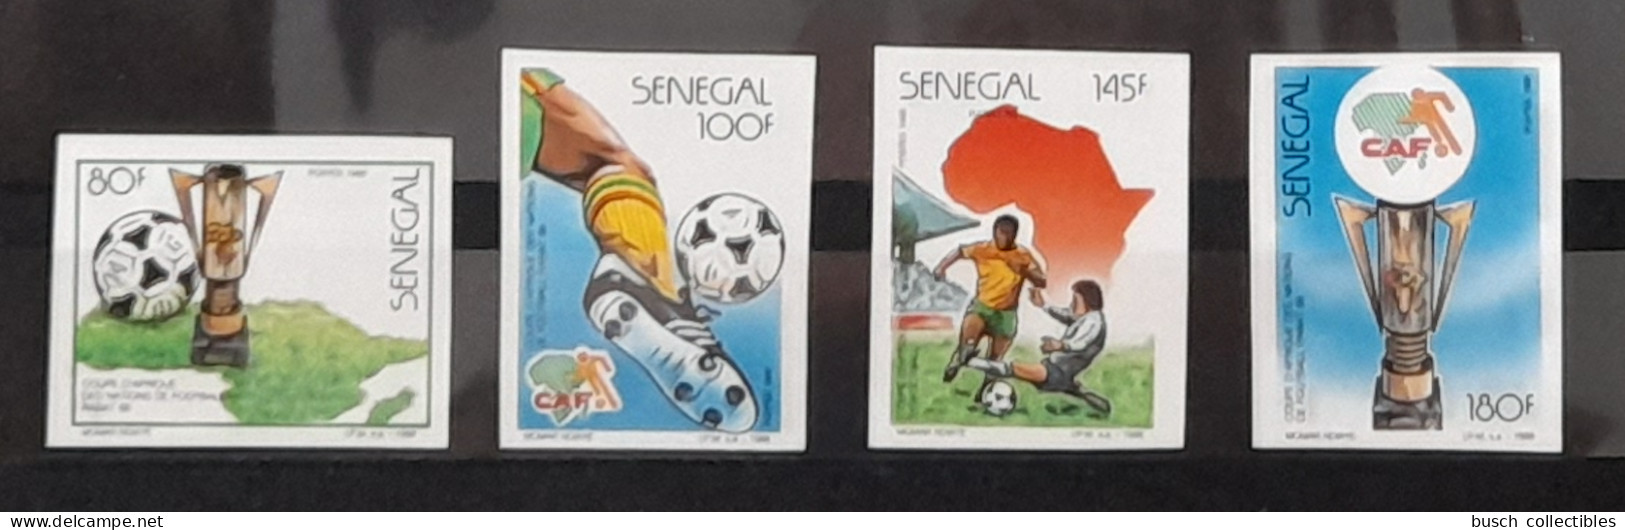 Sénégal 1988 Mi. 973 - 976 IMPERF ND Football Fußball Soccer CAF CAN Coupe D'Afrique Des Nations Rabat Maroc - Coppa Delle Nazioni Africane